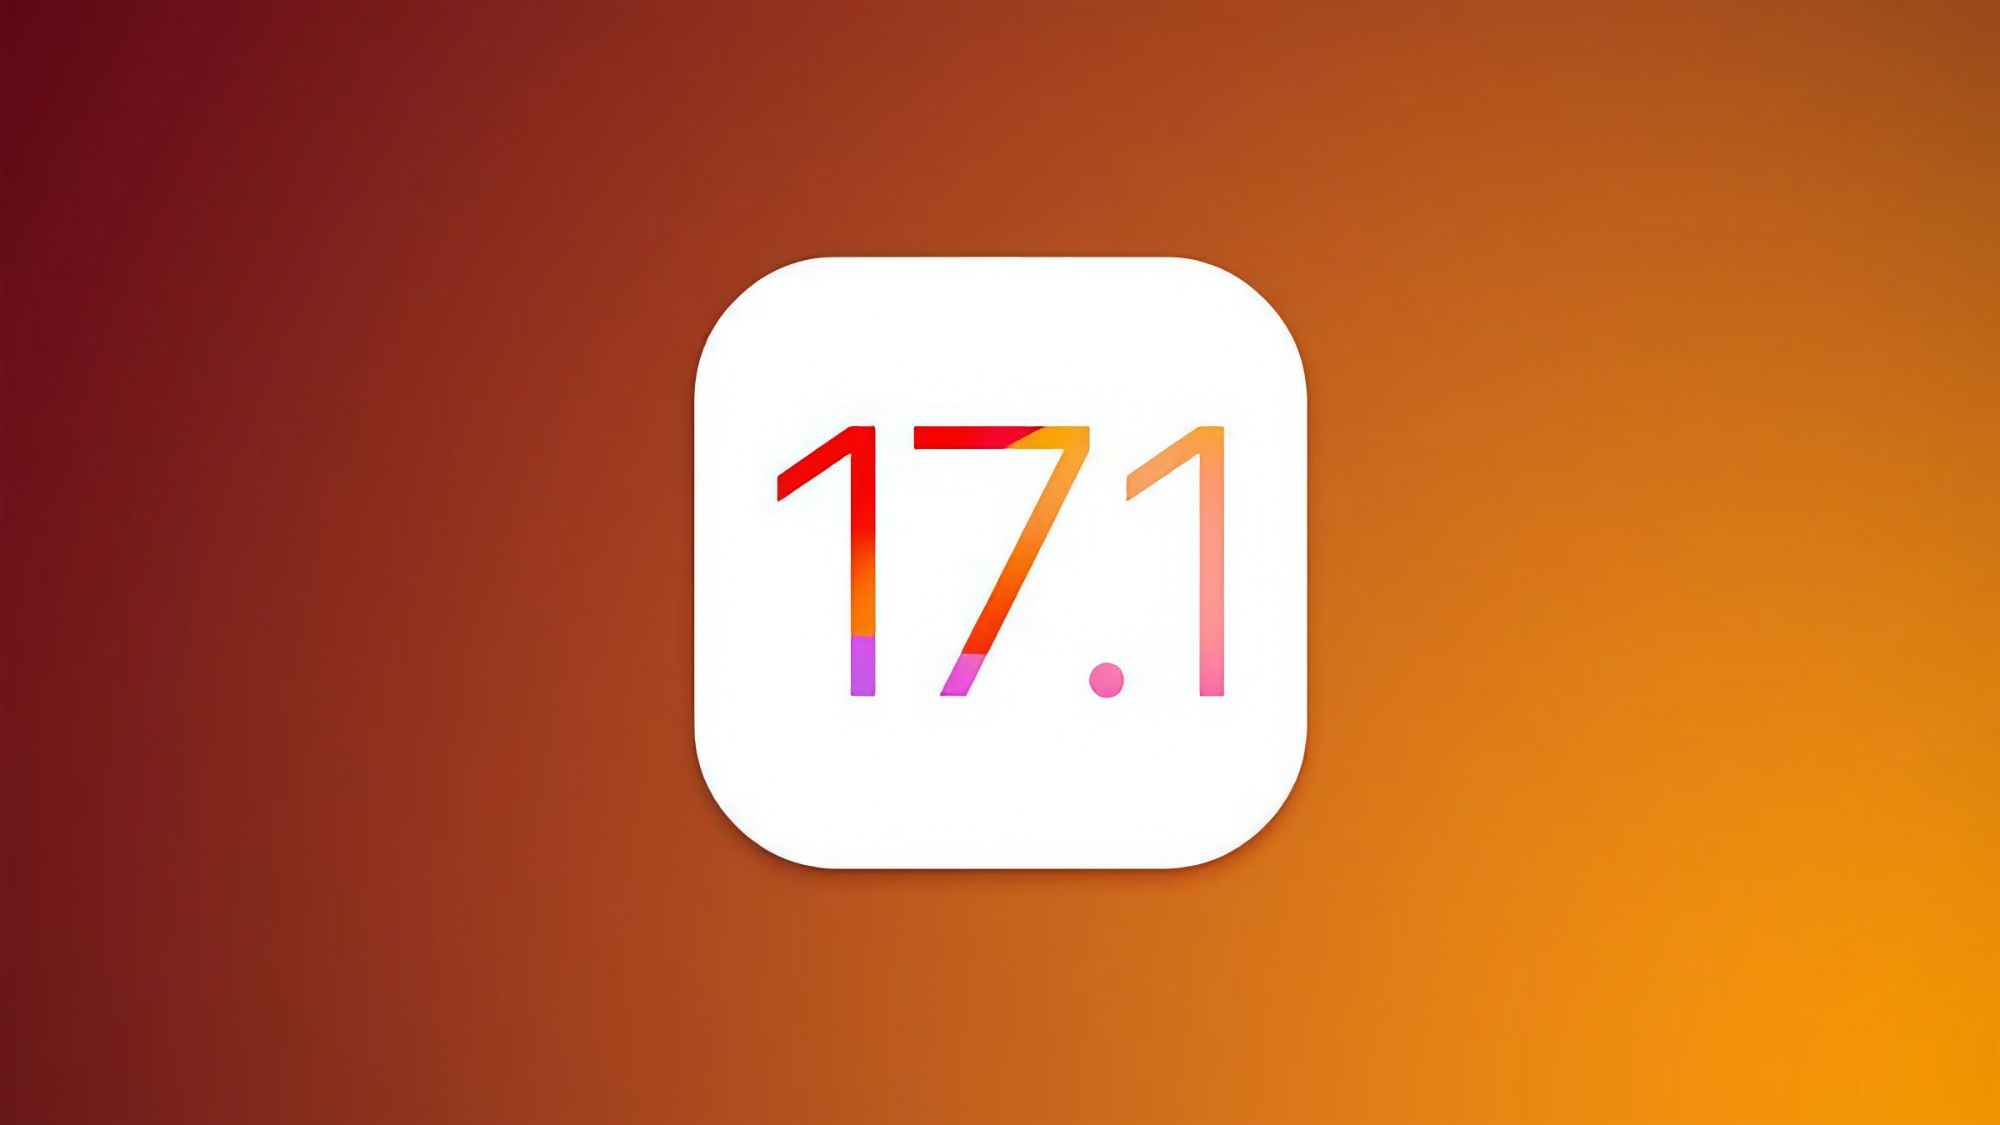 Apple has released iOS 17.1 Beta 2: what's new